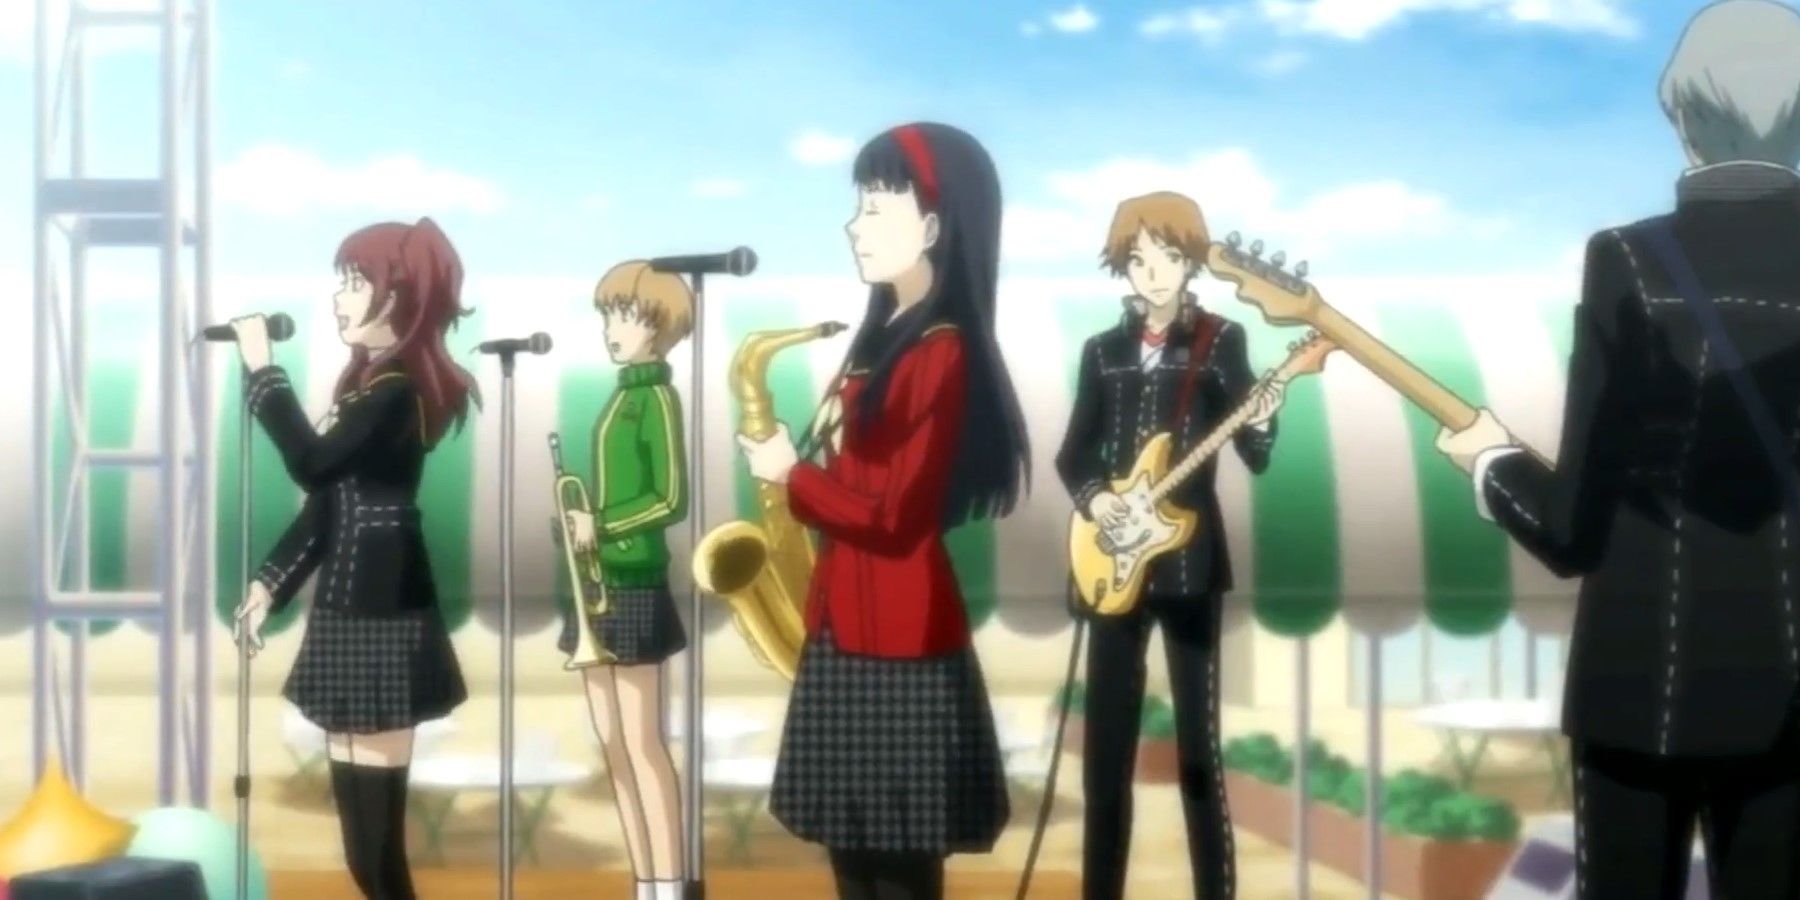 P4G Rise, Chie, Yukiko, Yosuke, and the MC playing in a band